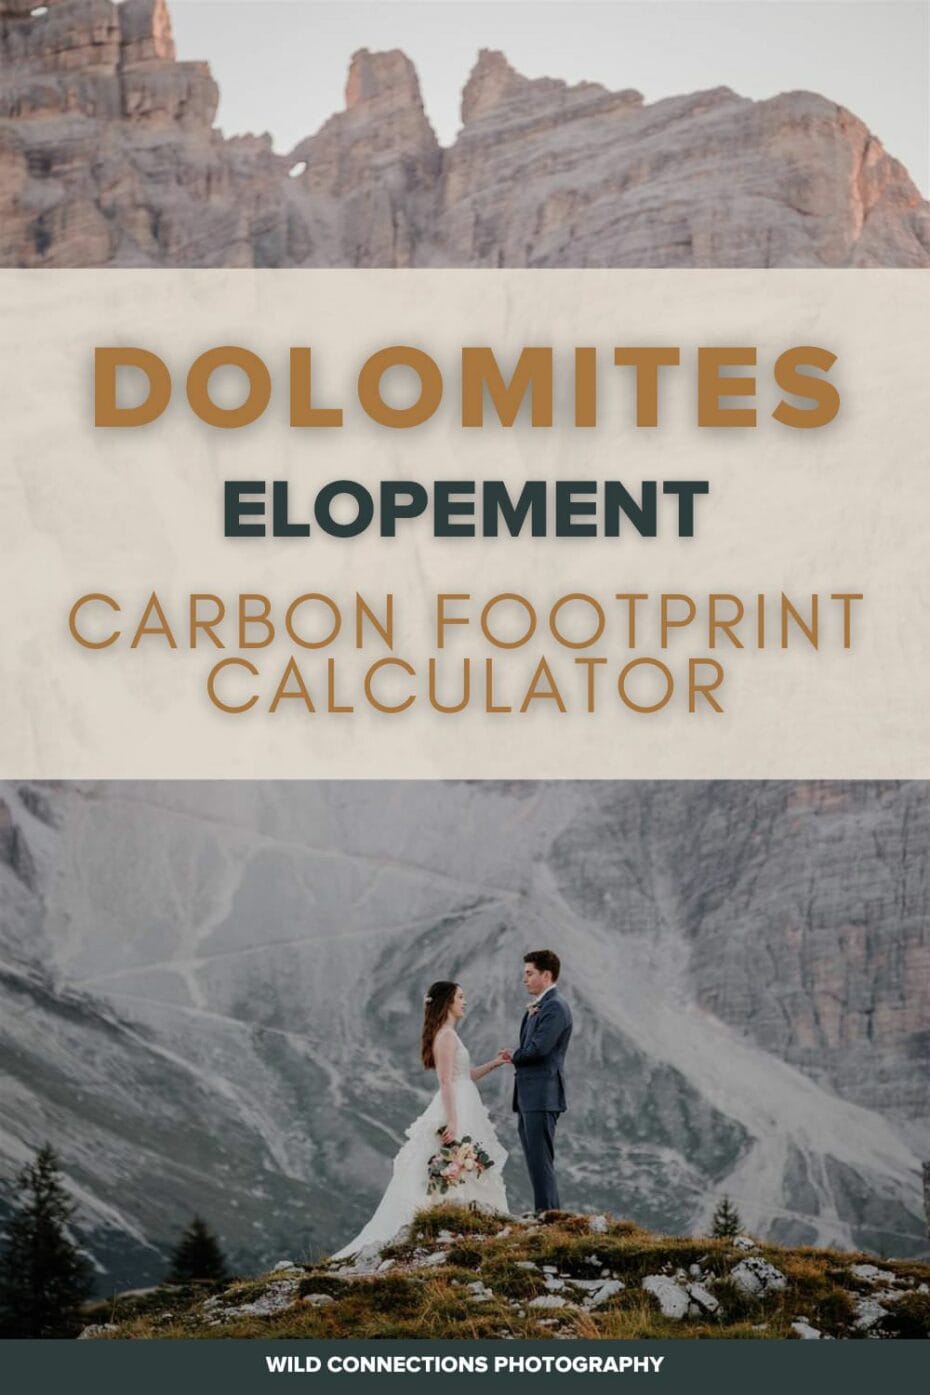 Dolomites elopement carbon footprint calculator